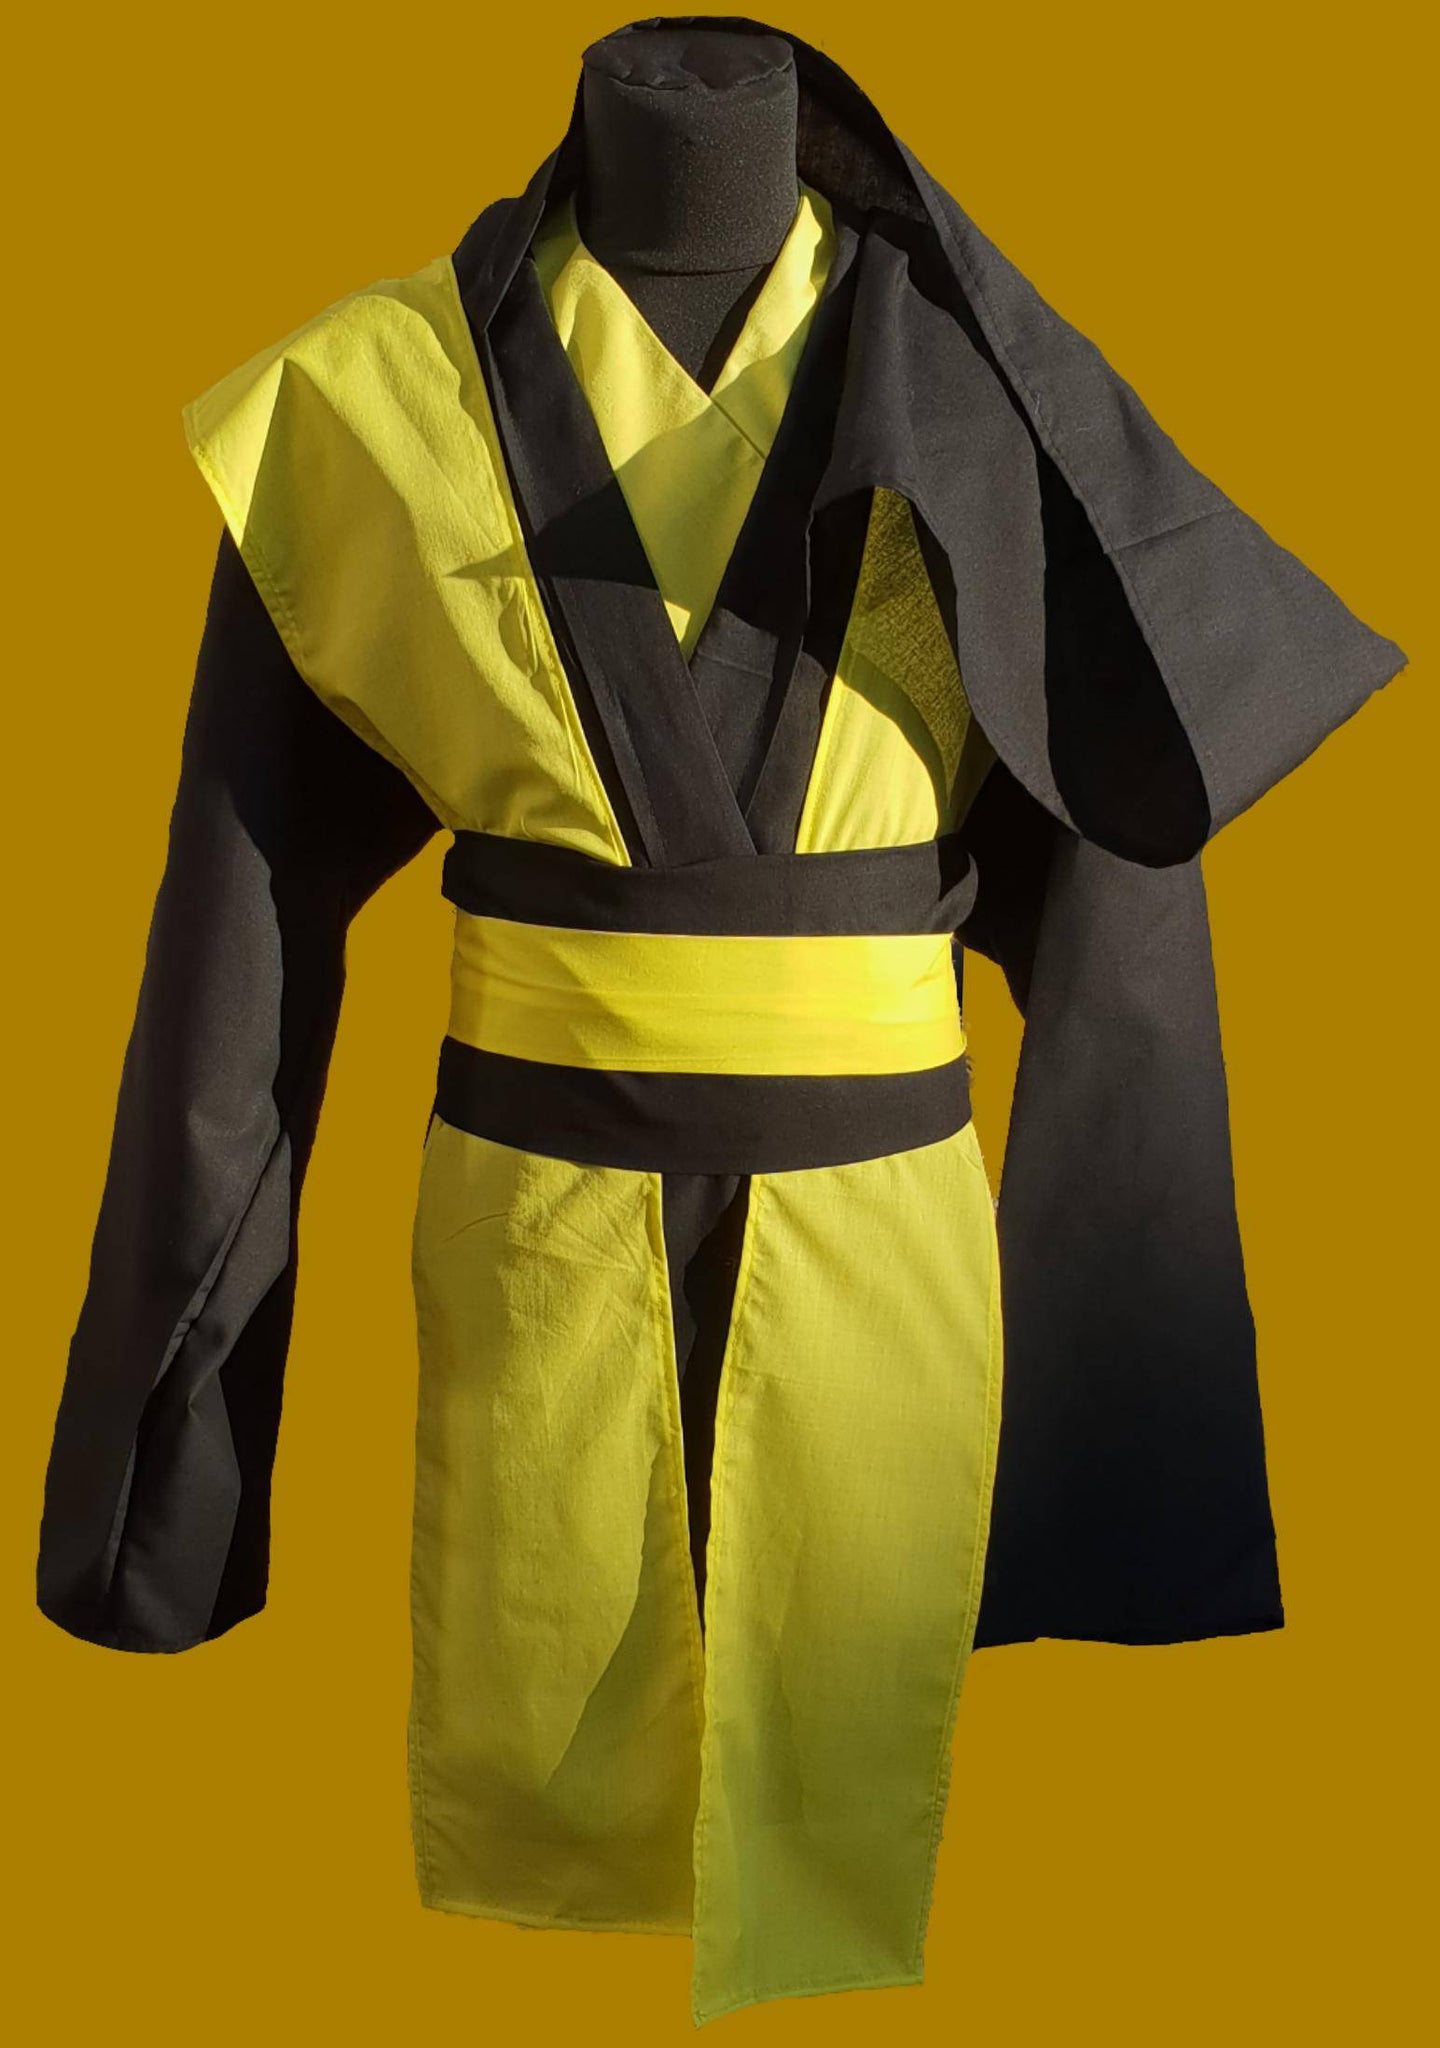 Handmade in all sizes worldwide shipping Mortal Kombat inspired Jedi robe set Star Wars inspired costume cosplay